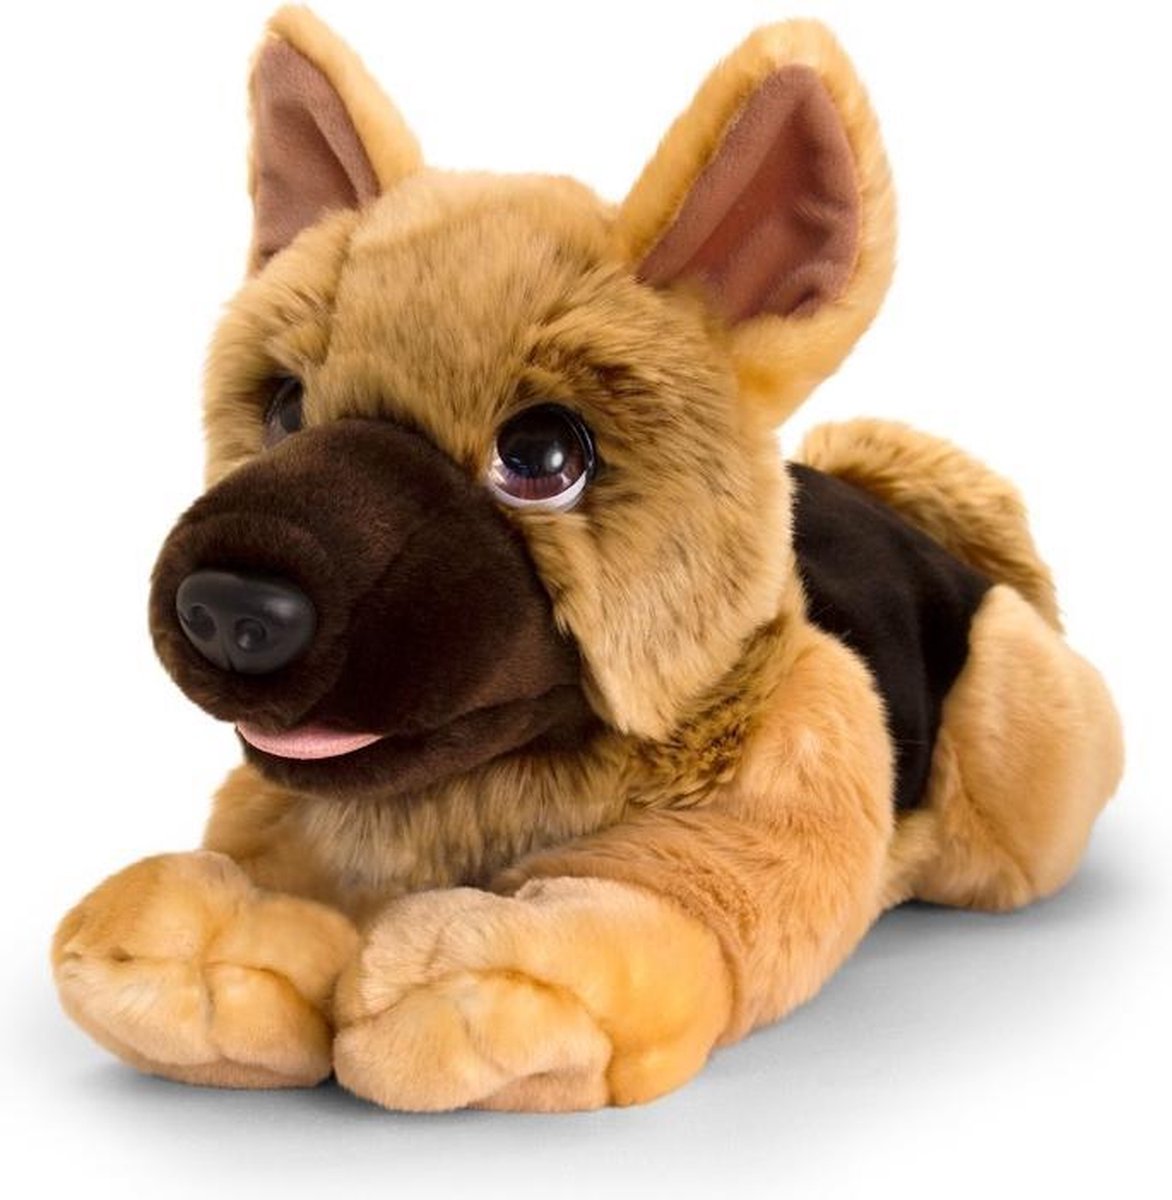 Keel Toys grote pluche Herdershond bruin honden knuffel 47 cm - Honden knuffeldieren - Speelgoed voor kind - Keel Toys